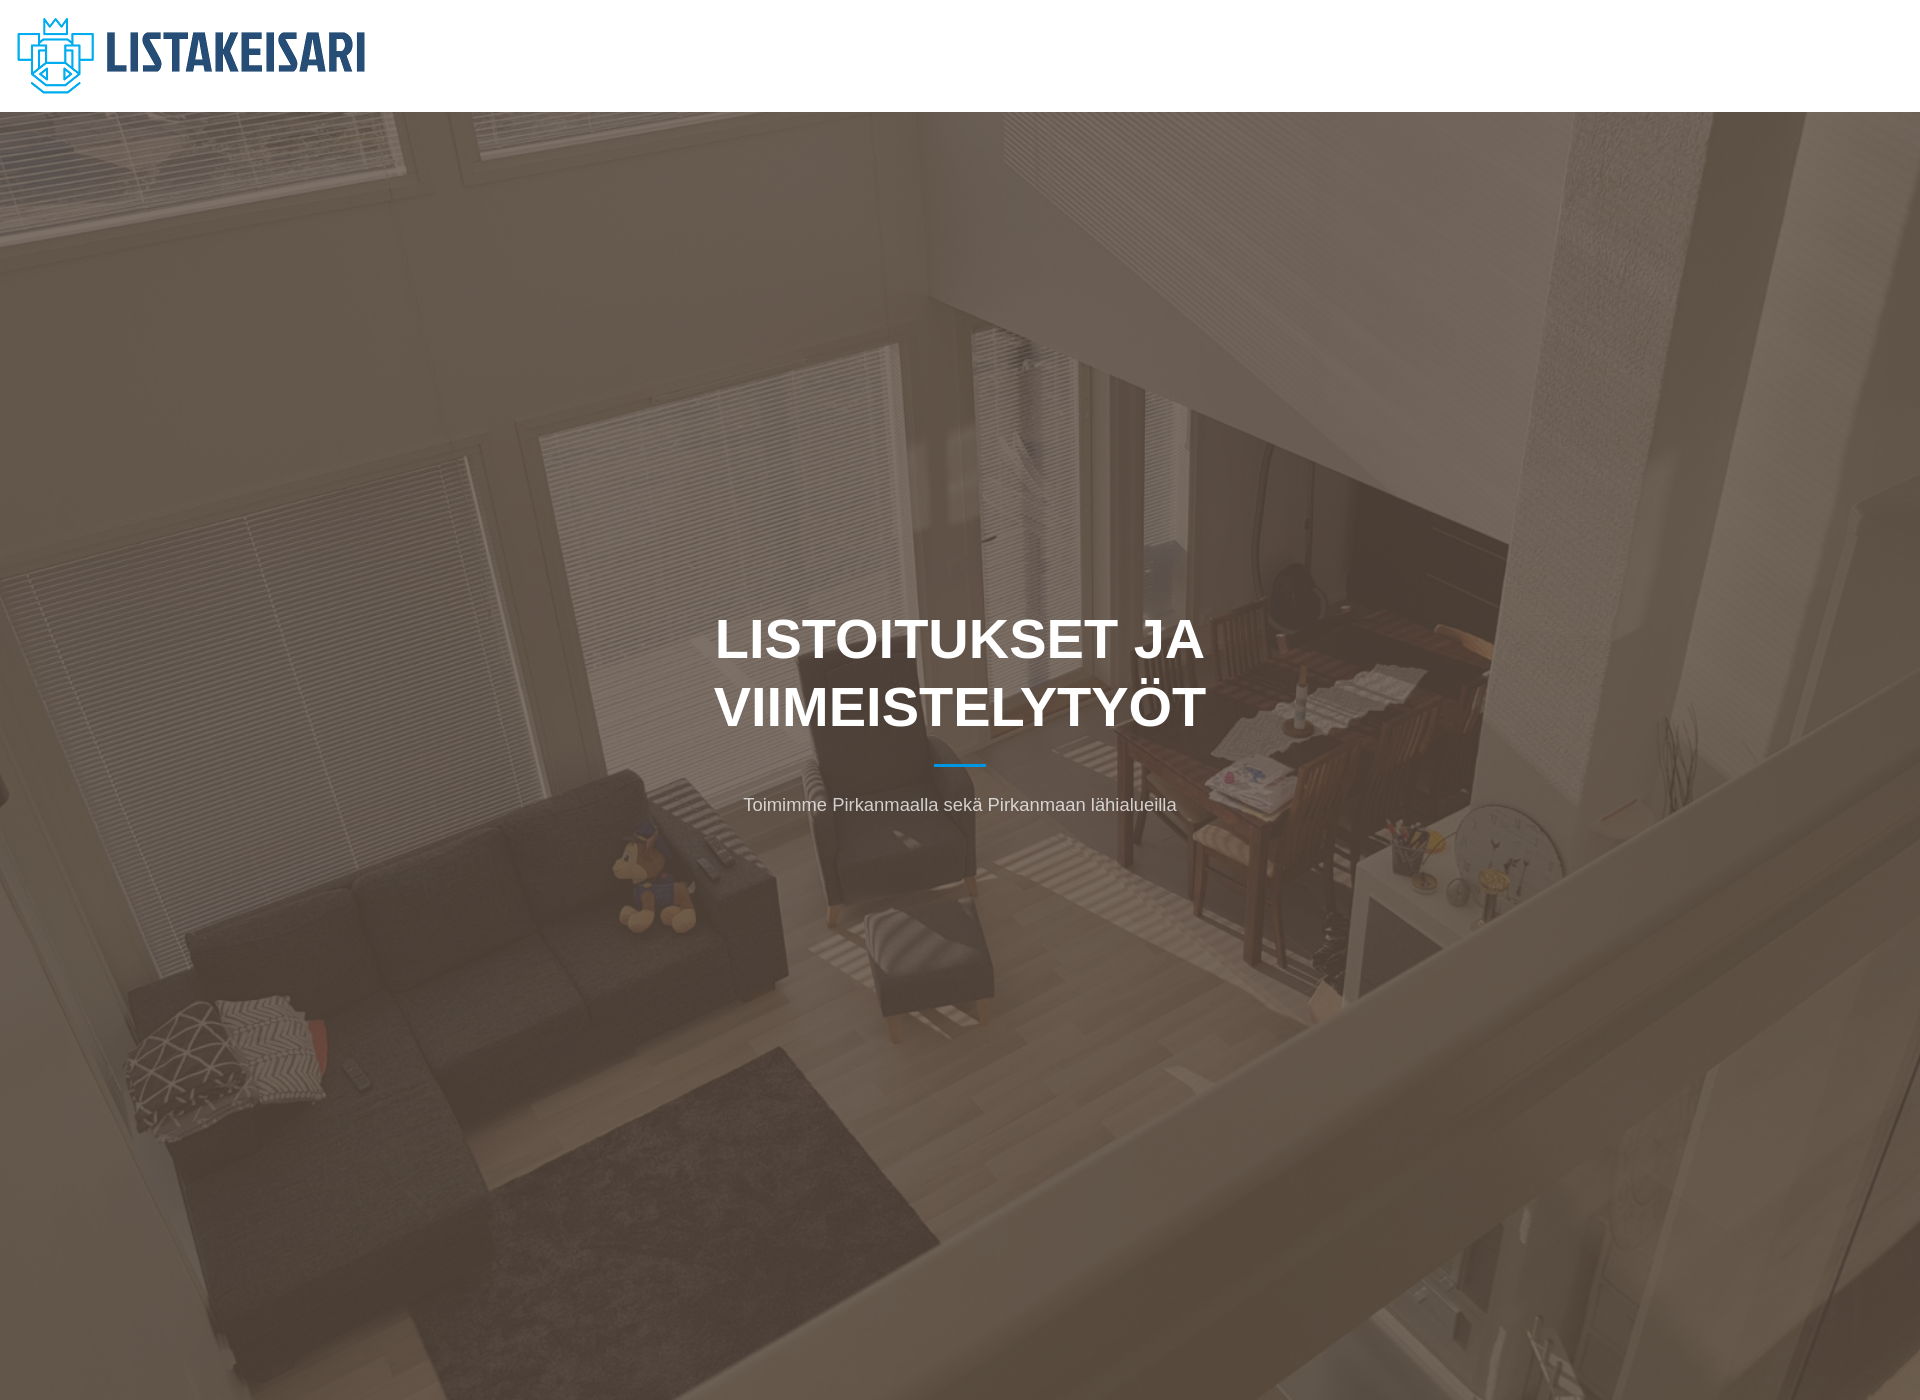 Skärmdump för listakeisari.fi